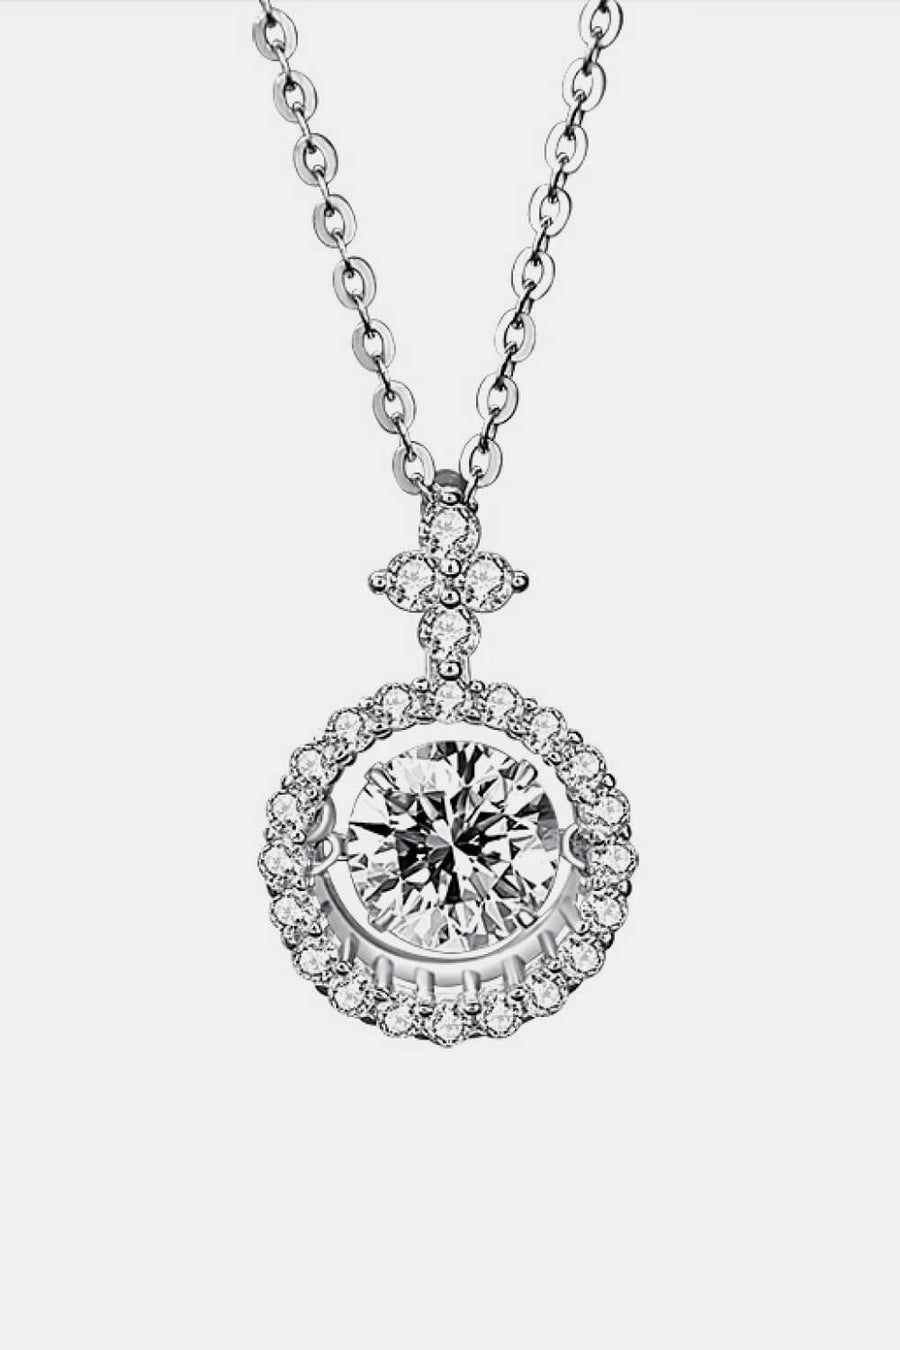 Best Diamond Necklace Jewelry Gifts for Women | 1 Carat Inlaid Round Diamond Pendant Necklace | MASON New York